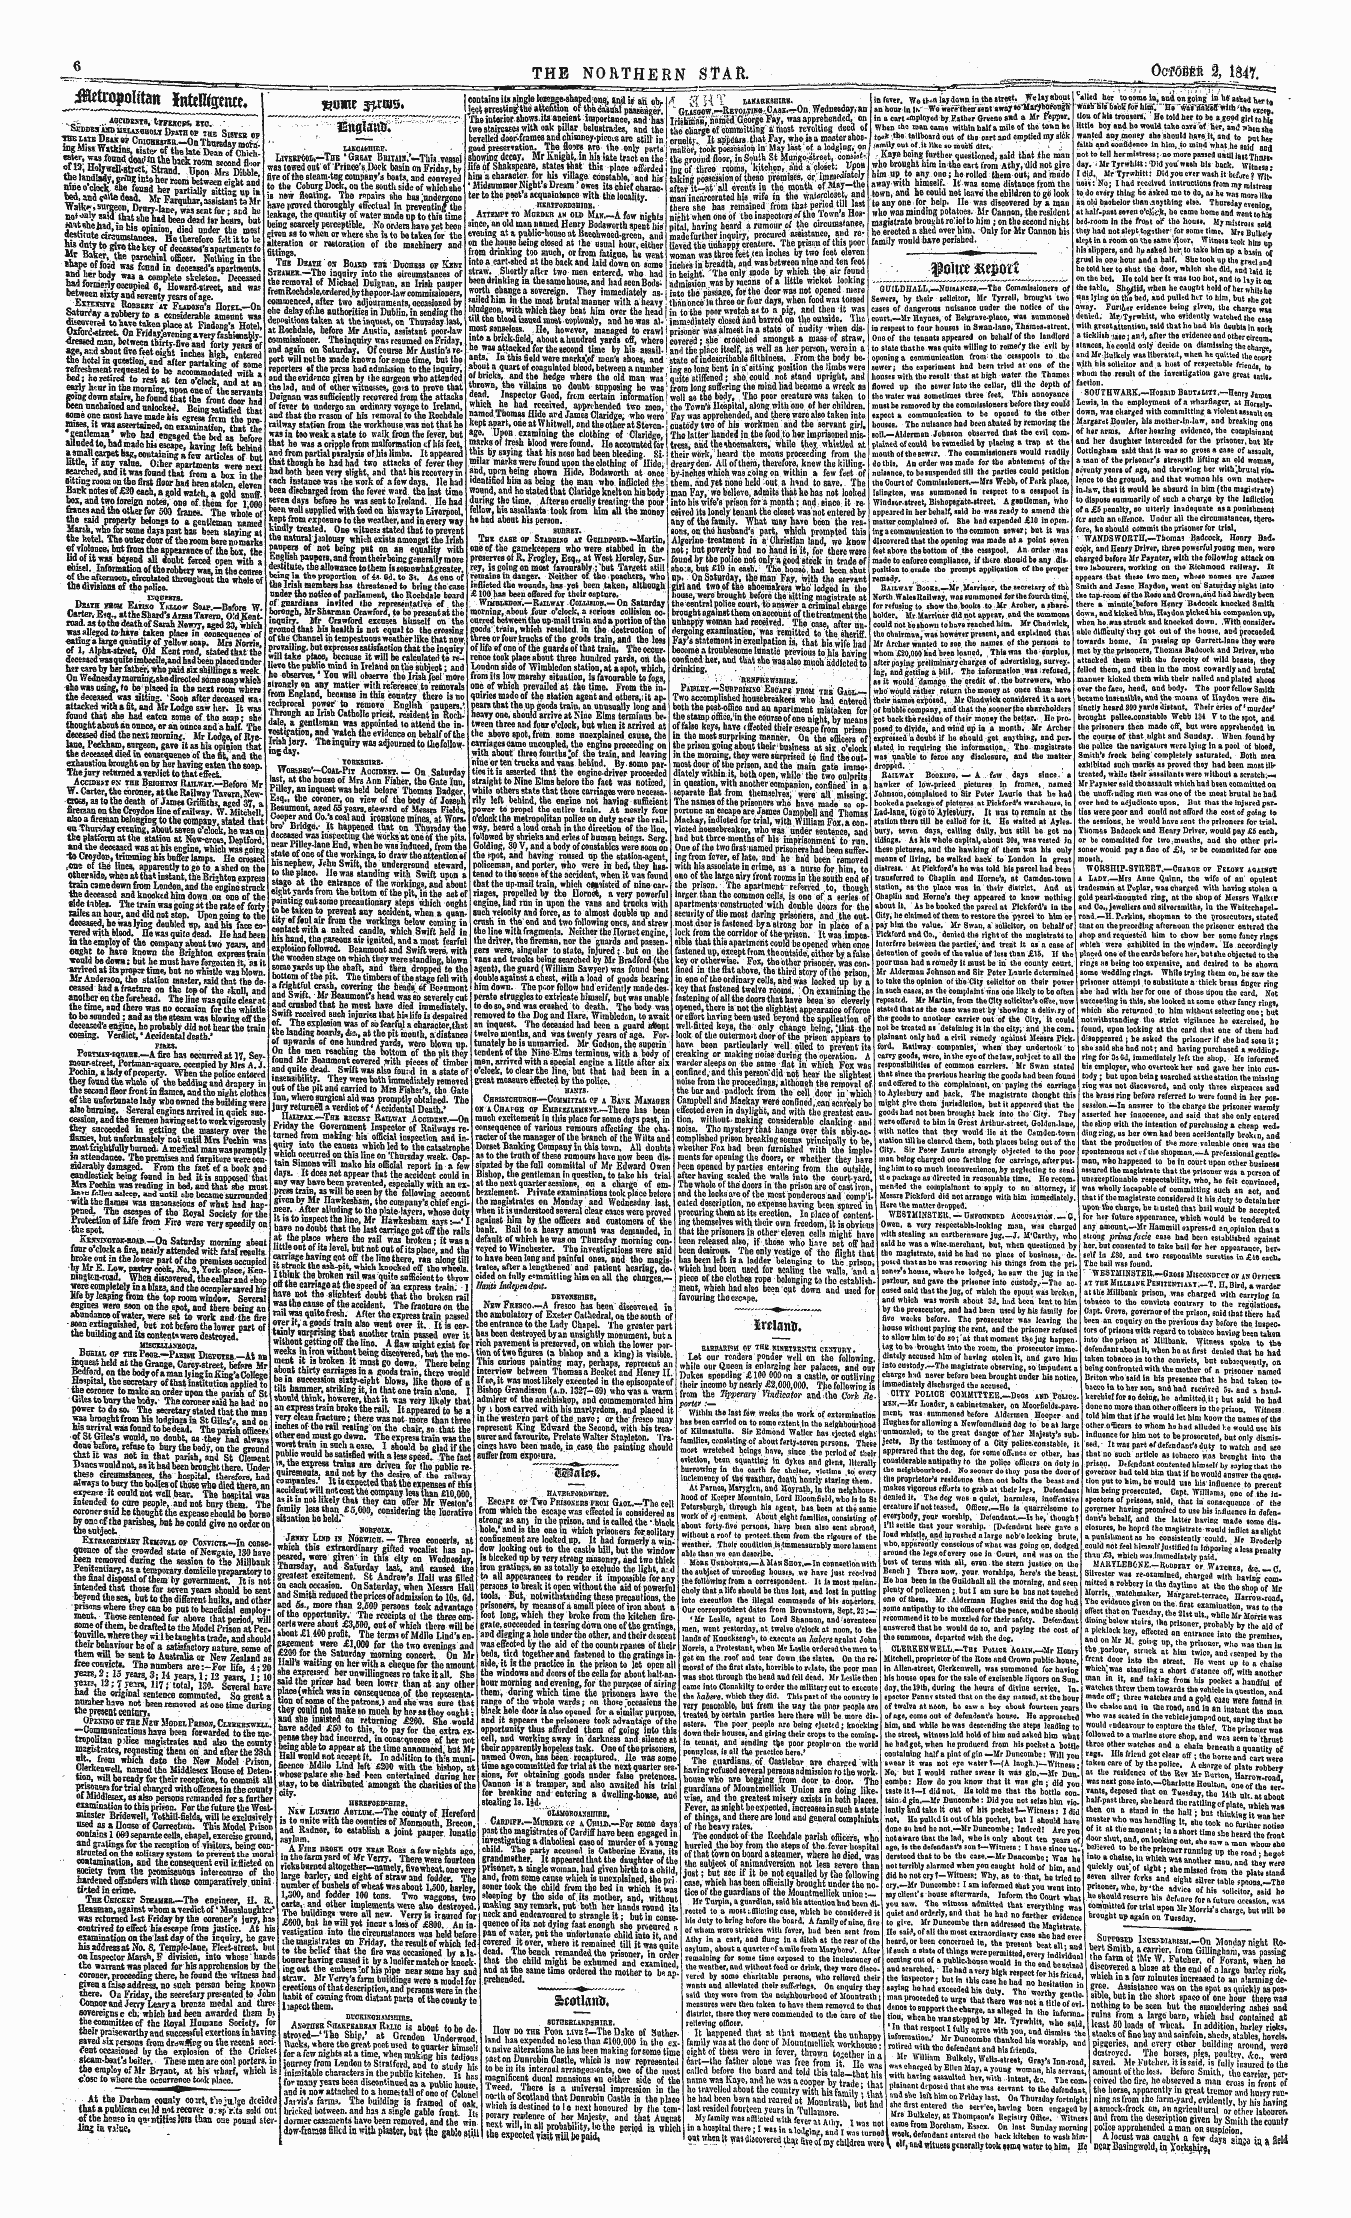 Northern Star (1837-1852): jS F Y, 1st edition - M*X ^N»S»